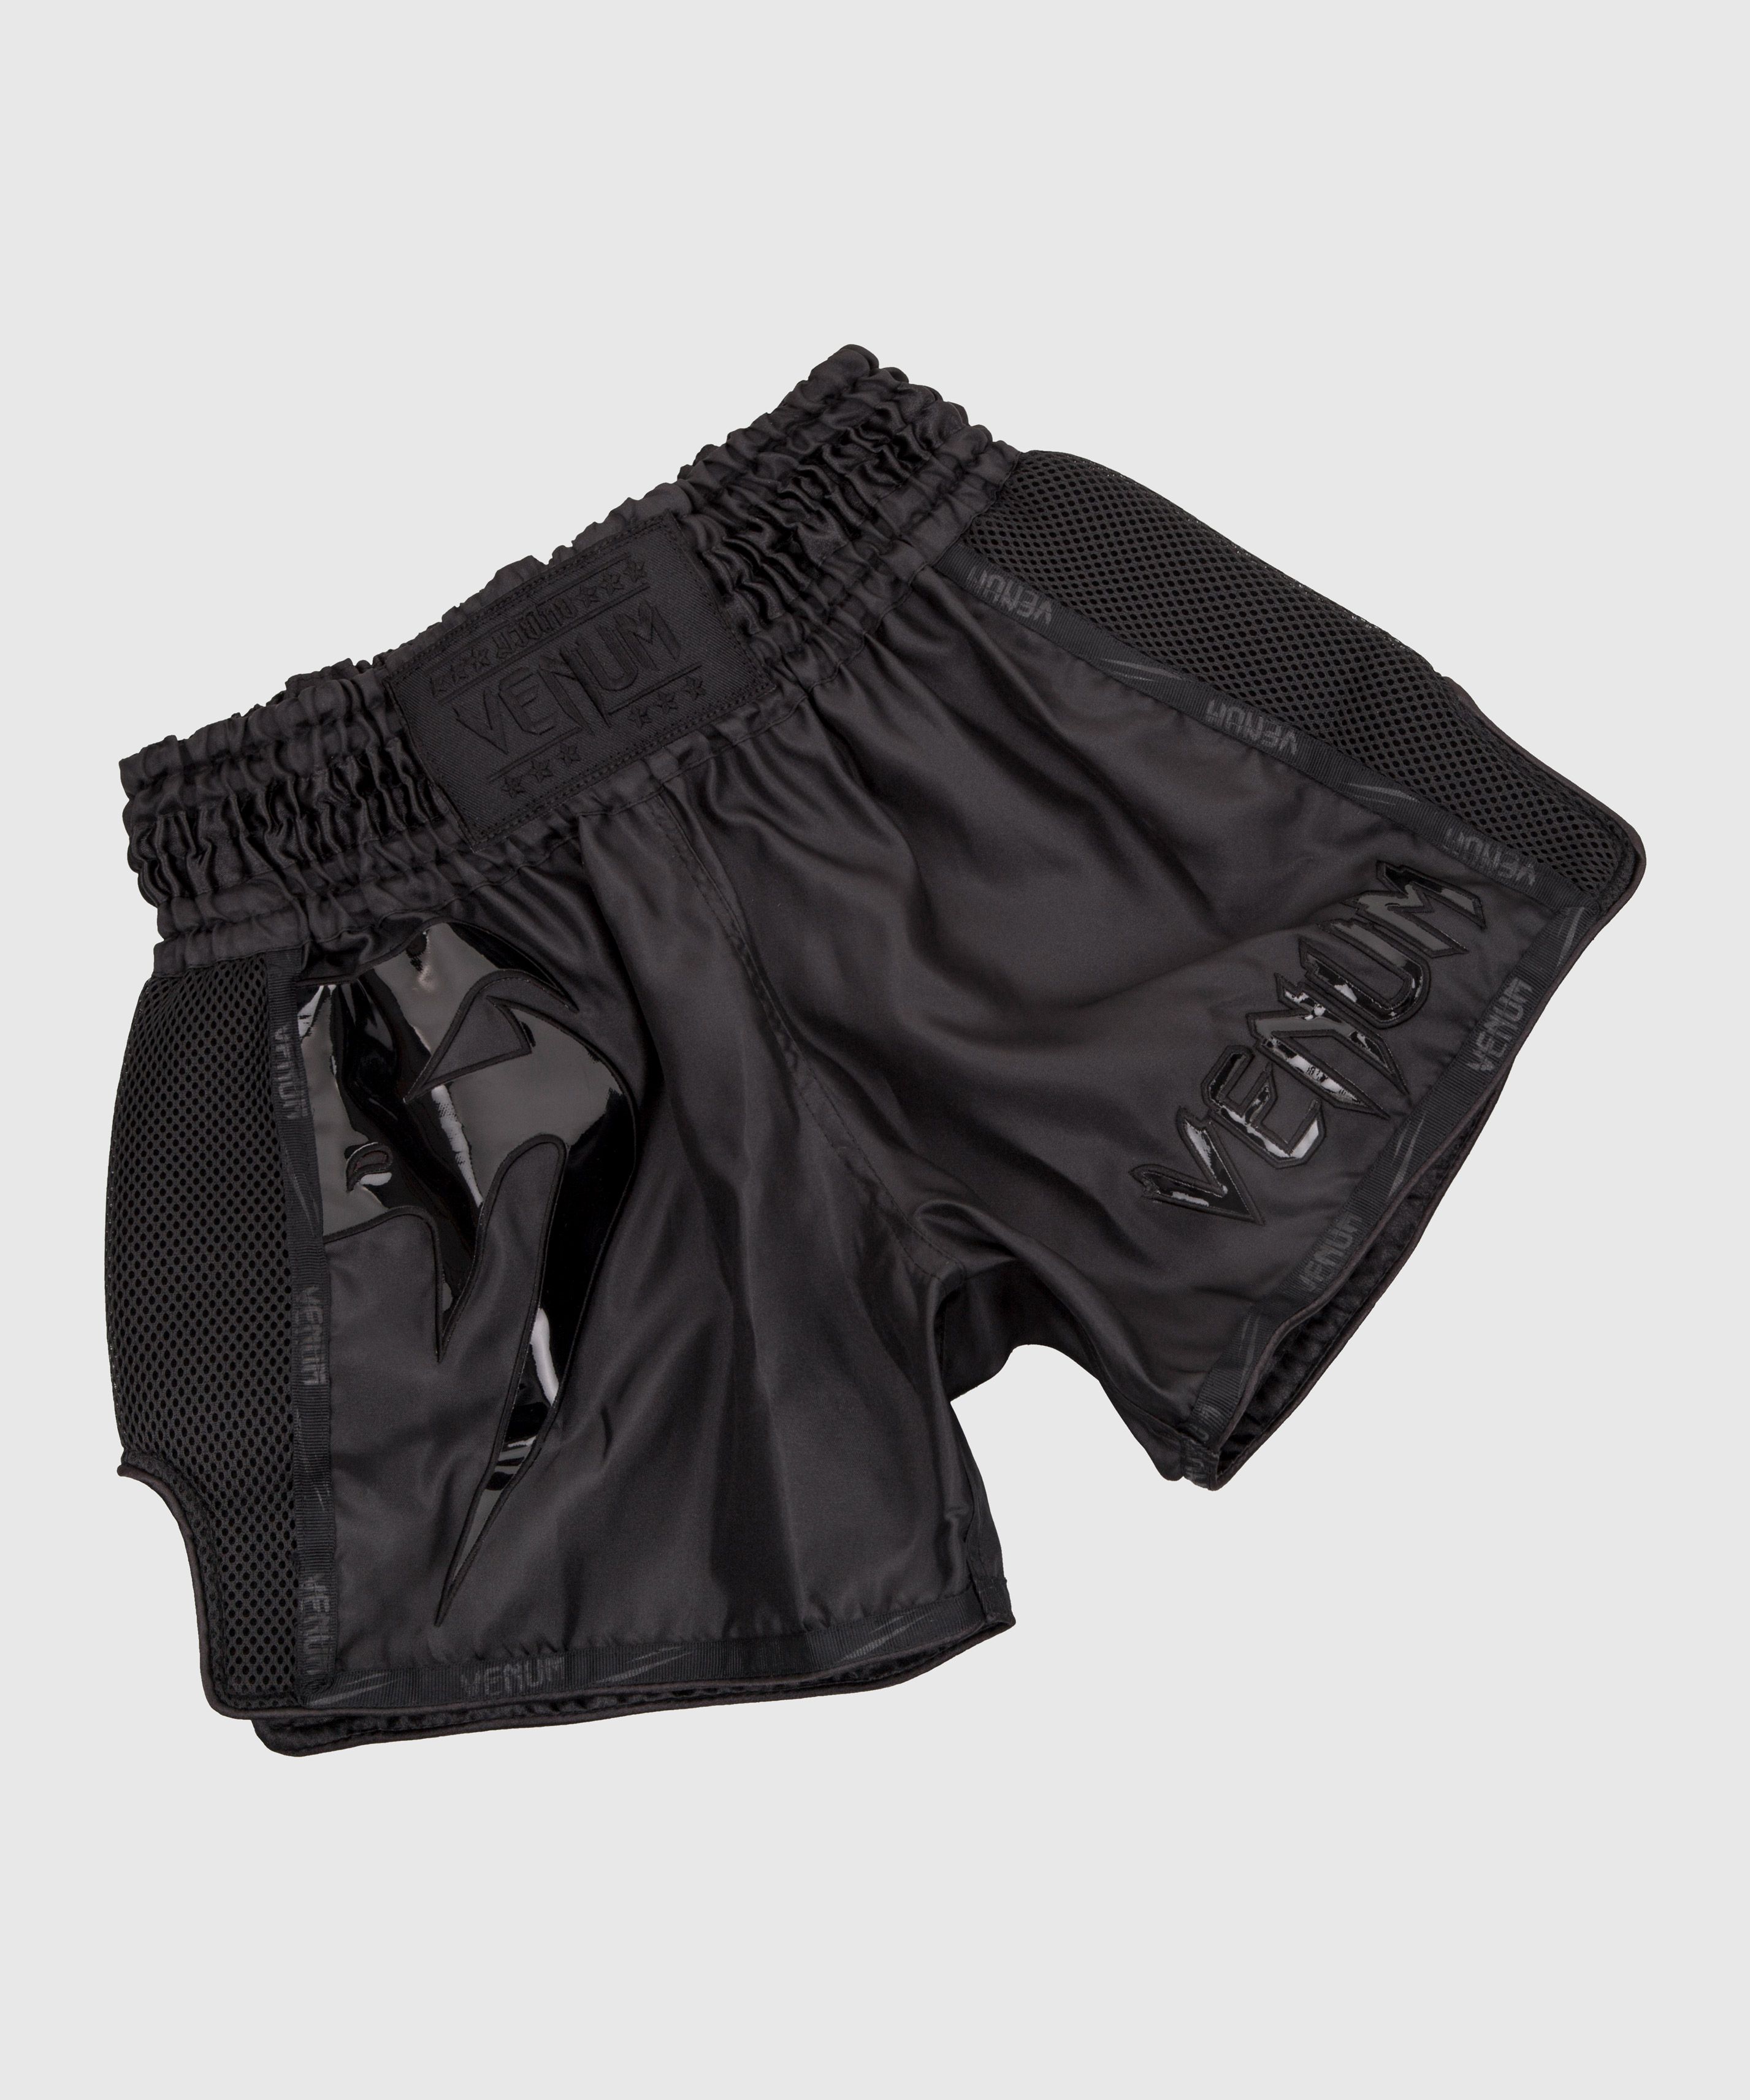 Venum Giant Muay Thai Shorts - Black/Black